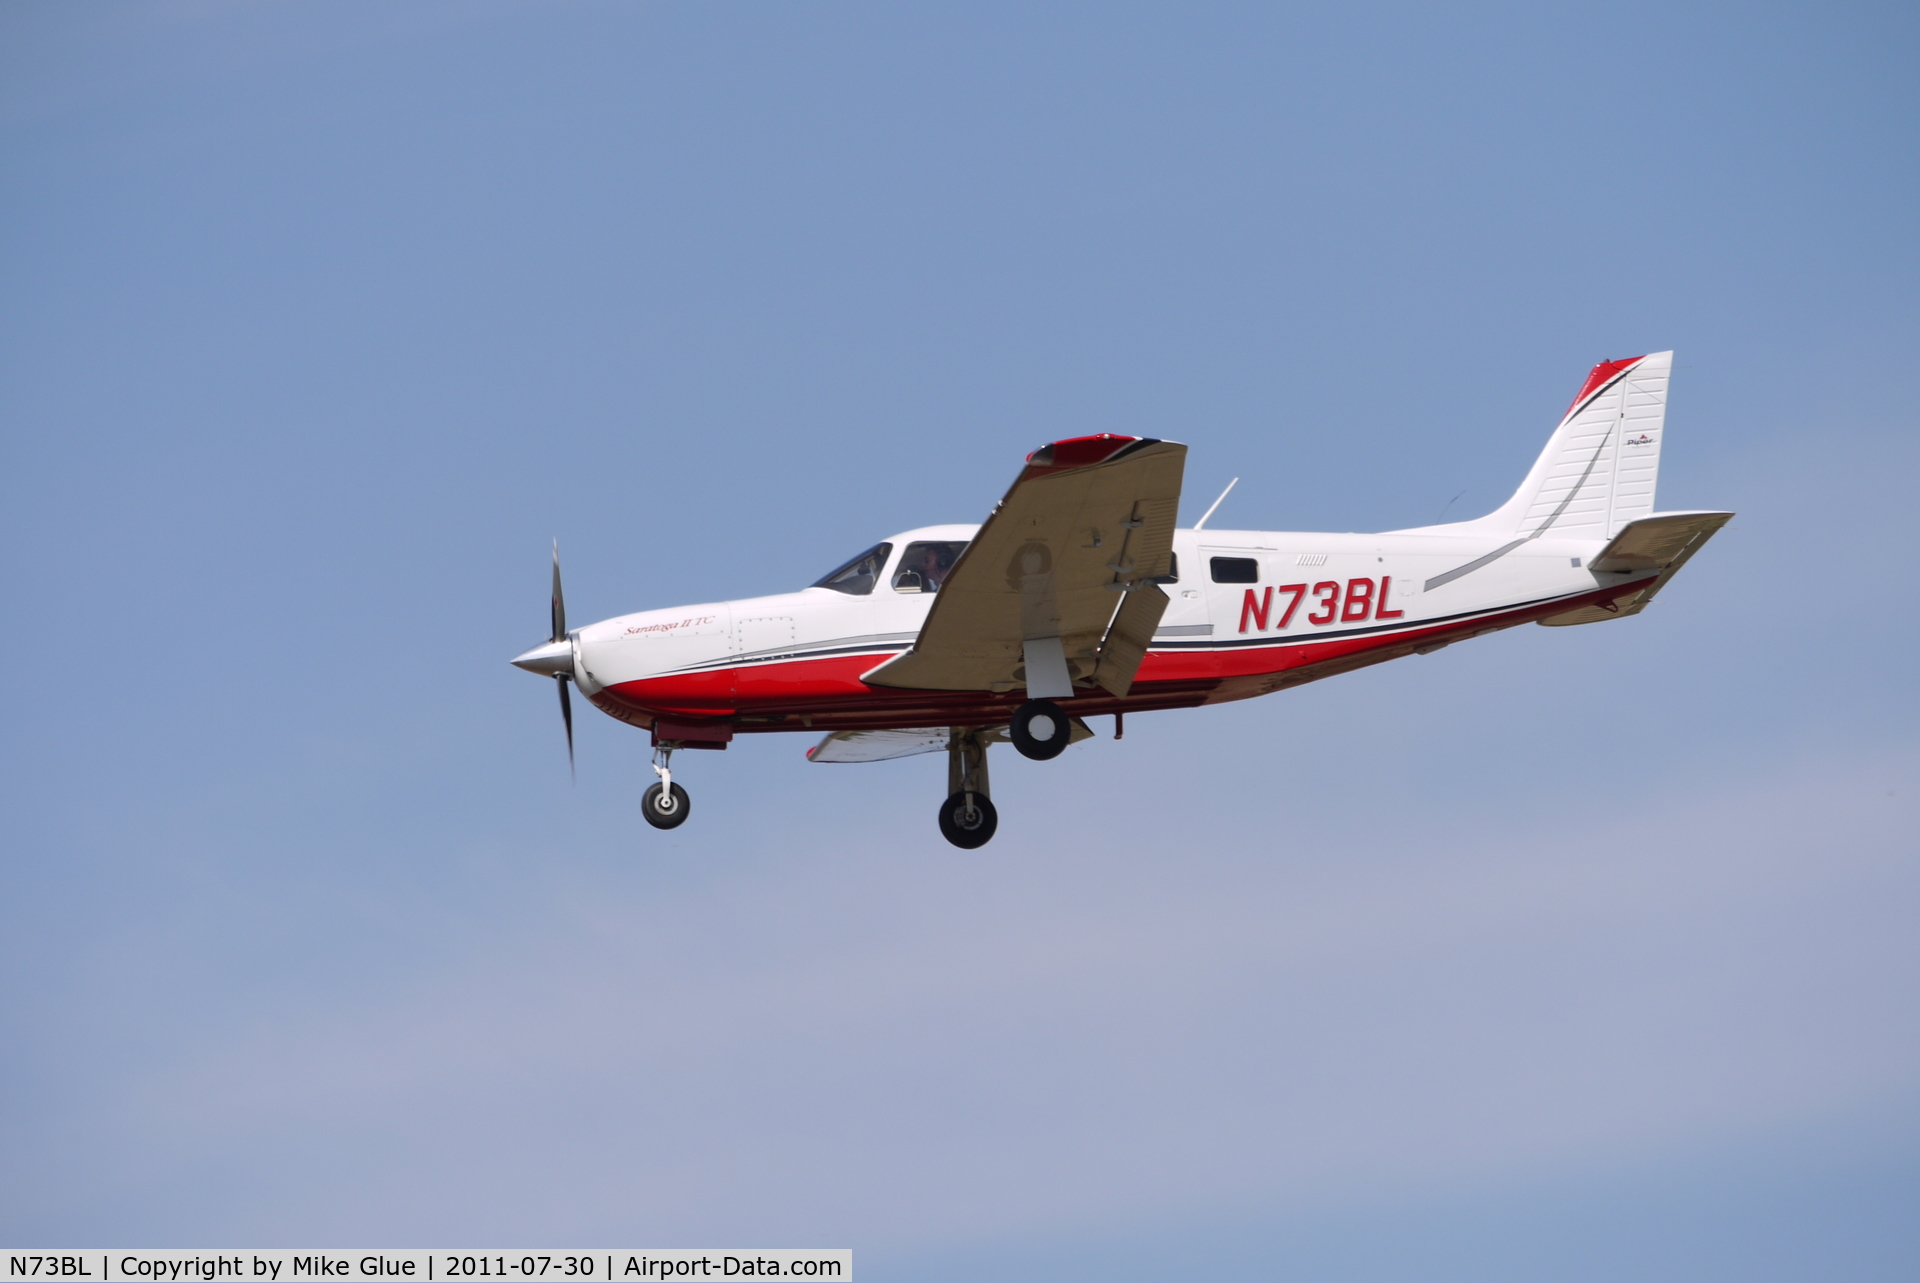 N73BL, 2007 Piper PA-32R-301T Turbo Saratoga C/N 3257450, N73BL landing at Panshager